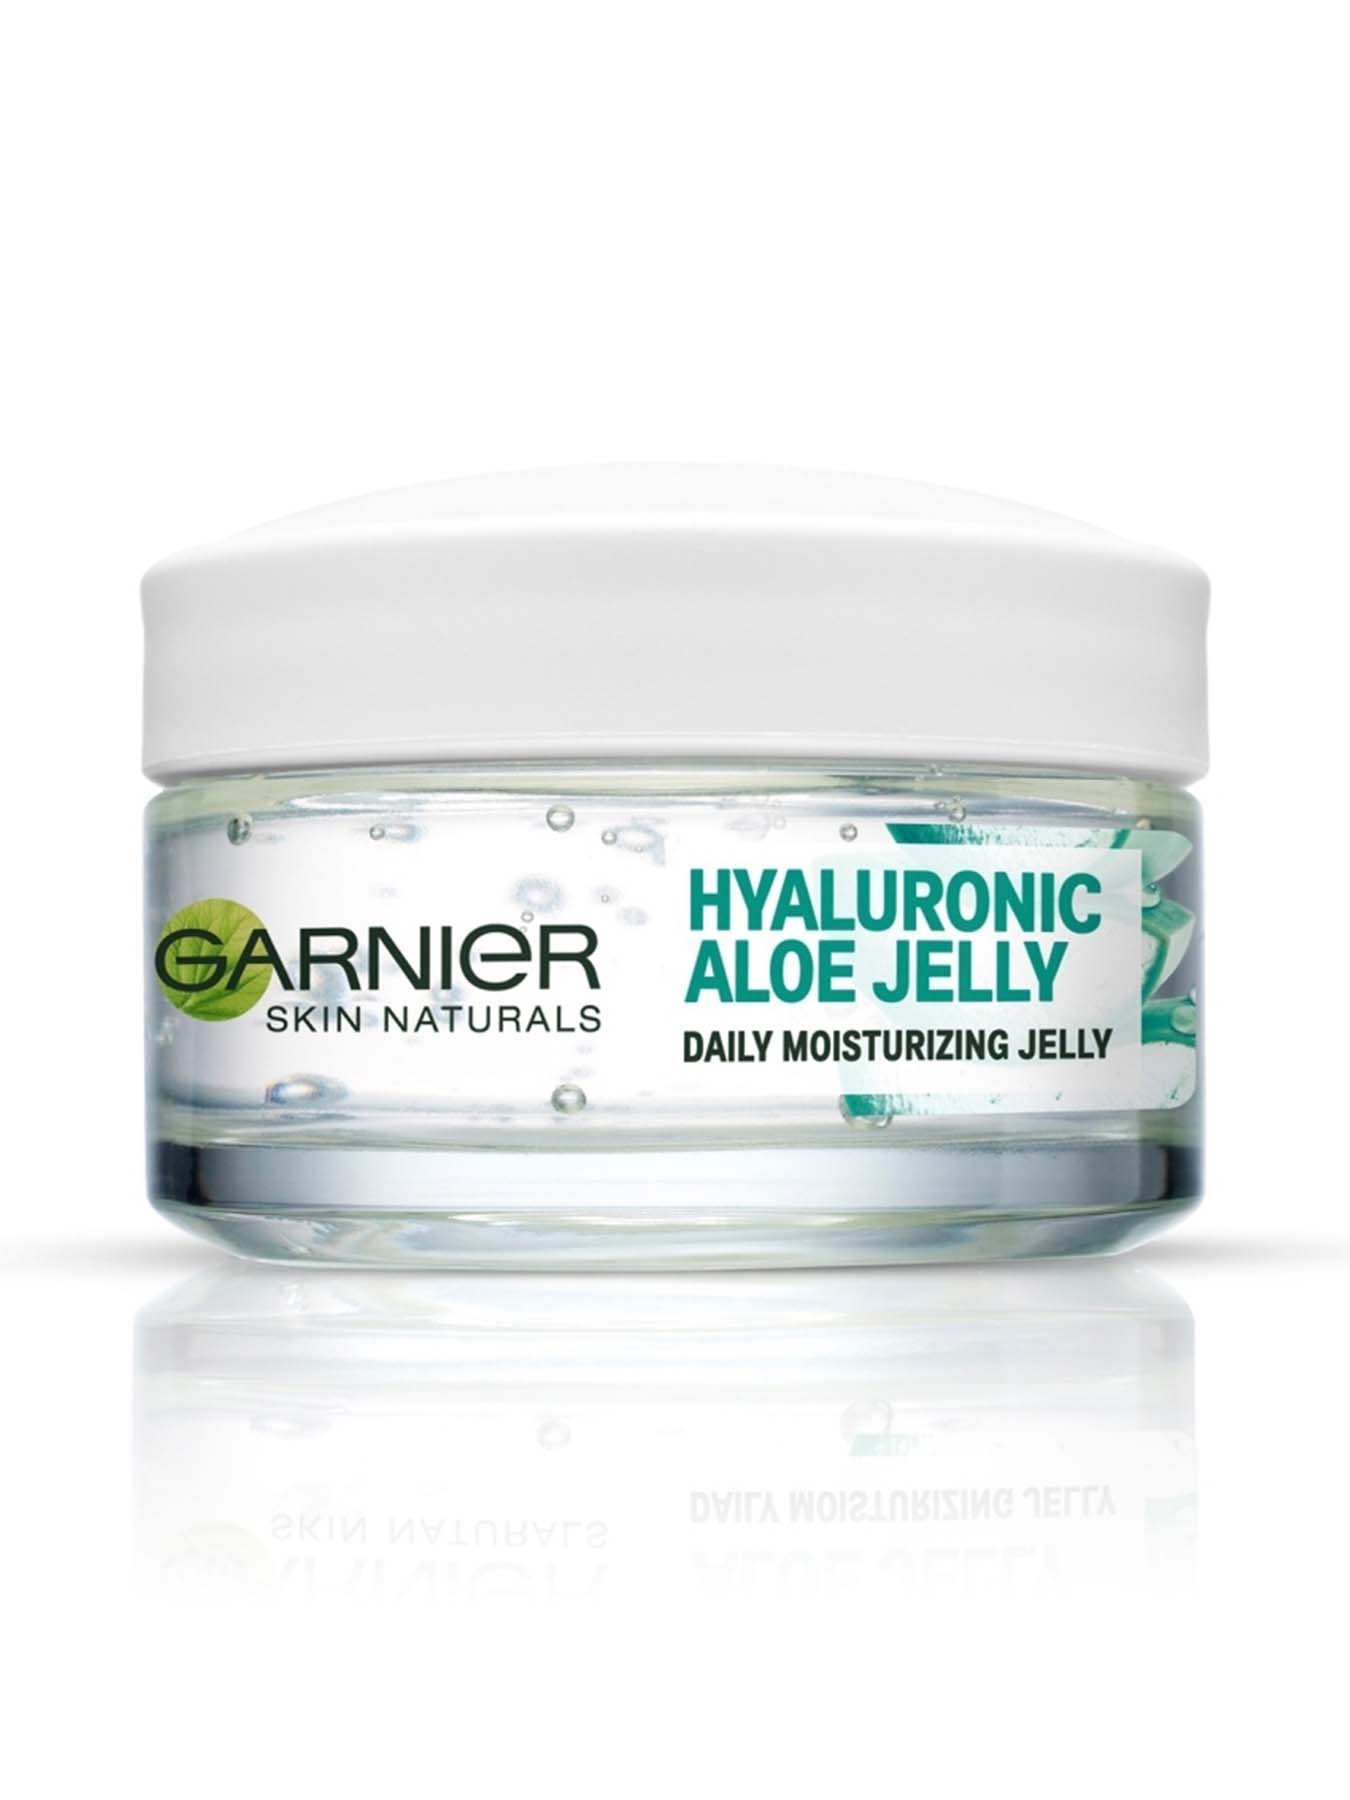 Garnier Skin Naturals Hyaluronic Aloe Jelly хидратиращ гел за нормална кожа 